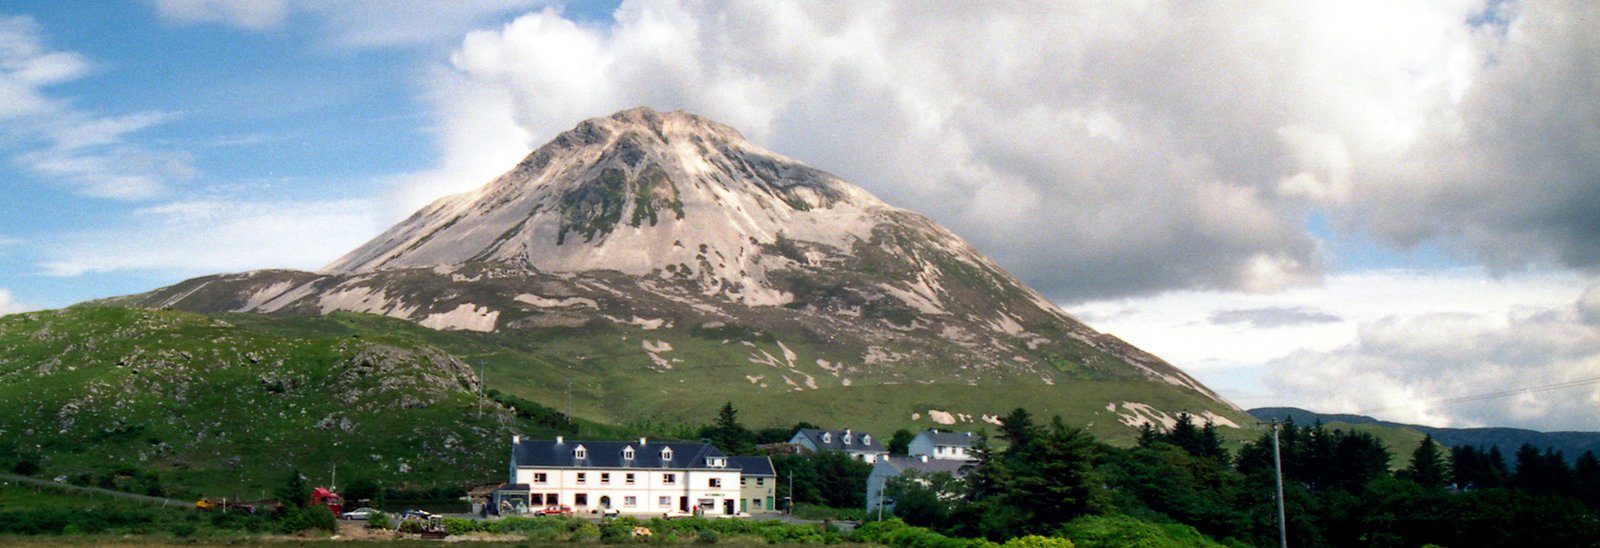 Mt. Errigal in Dunlewey, County Donegal, Ireland.